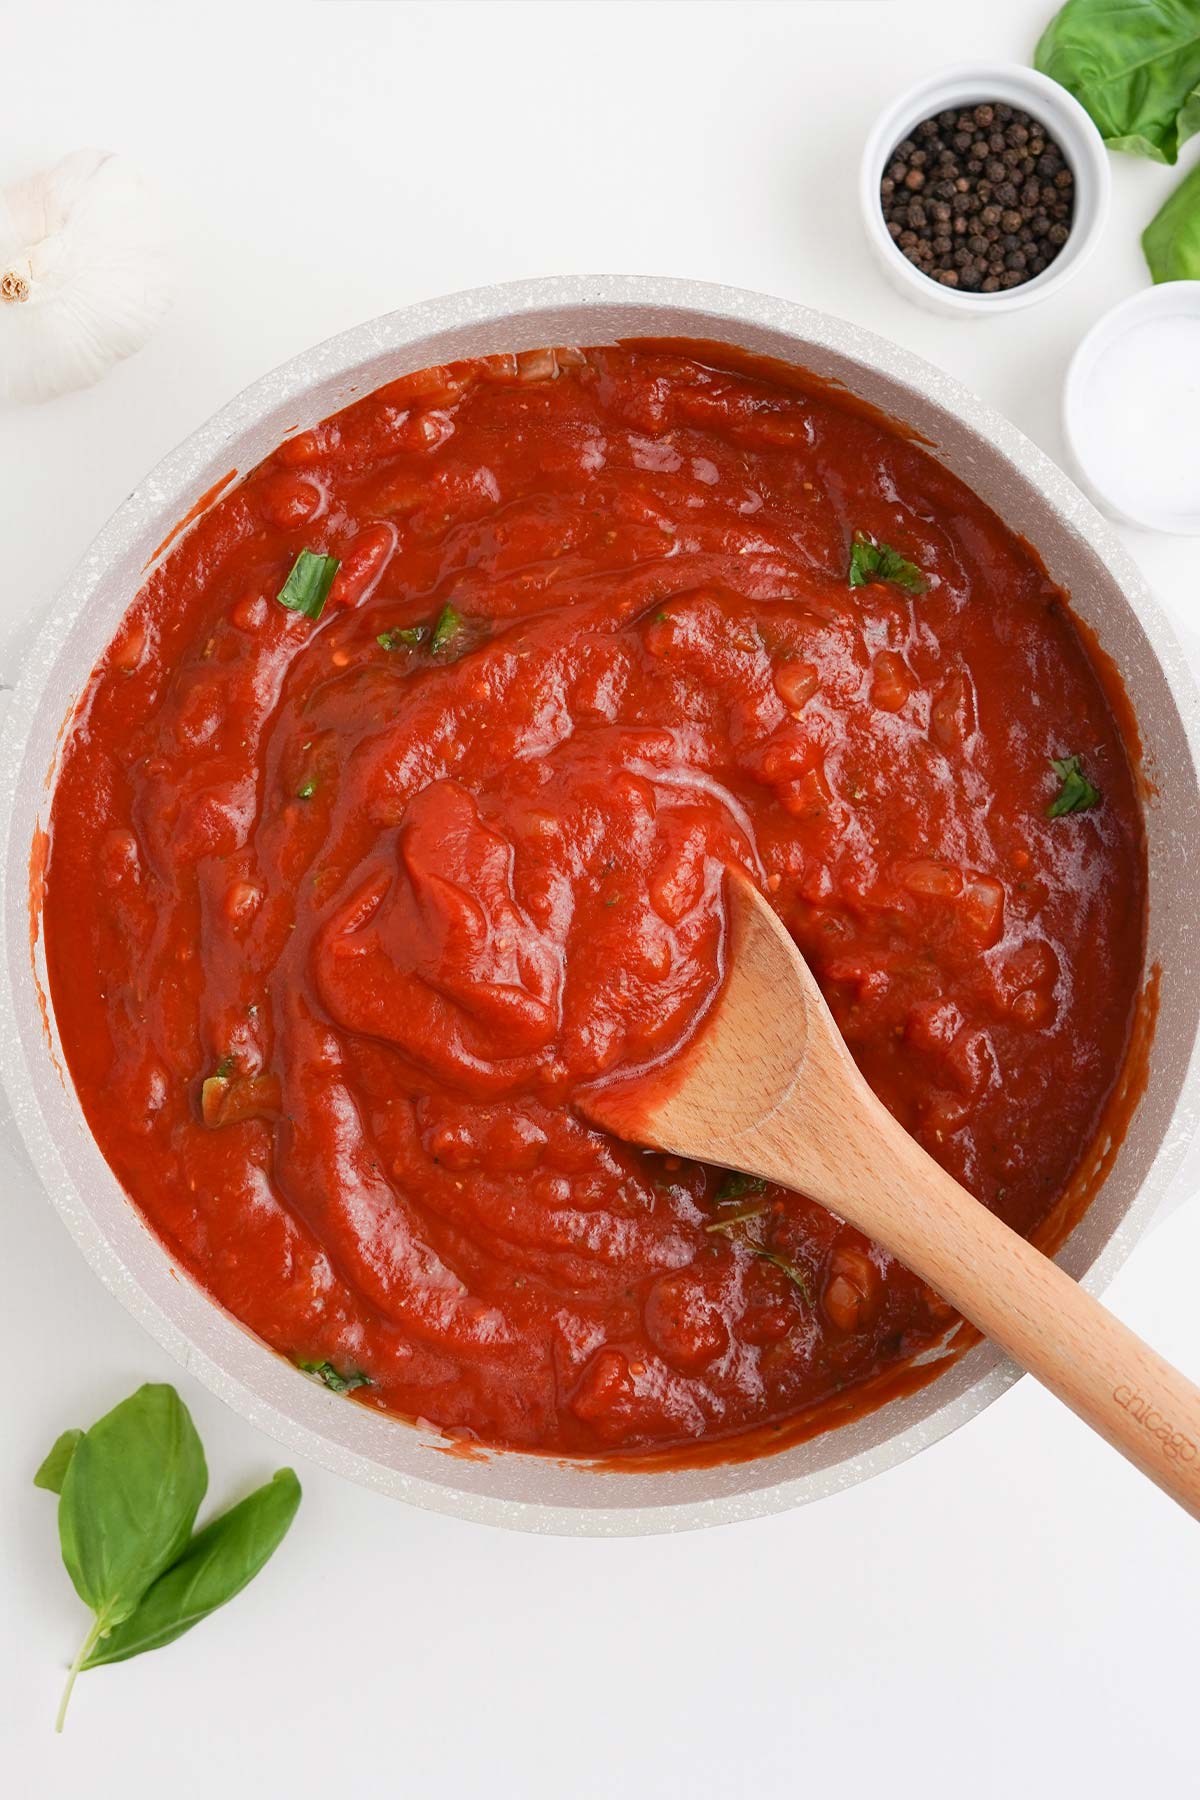 Tomato ingredients are added to the onion mixture to make spaghetti arrabiata.